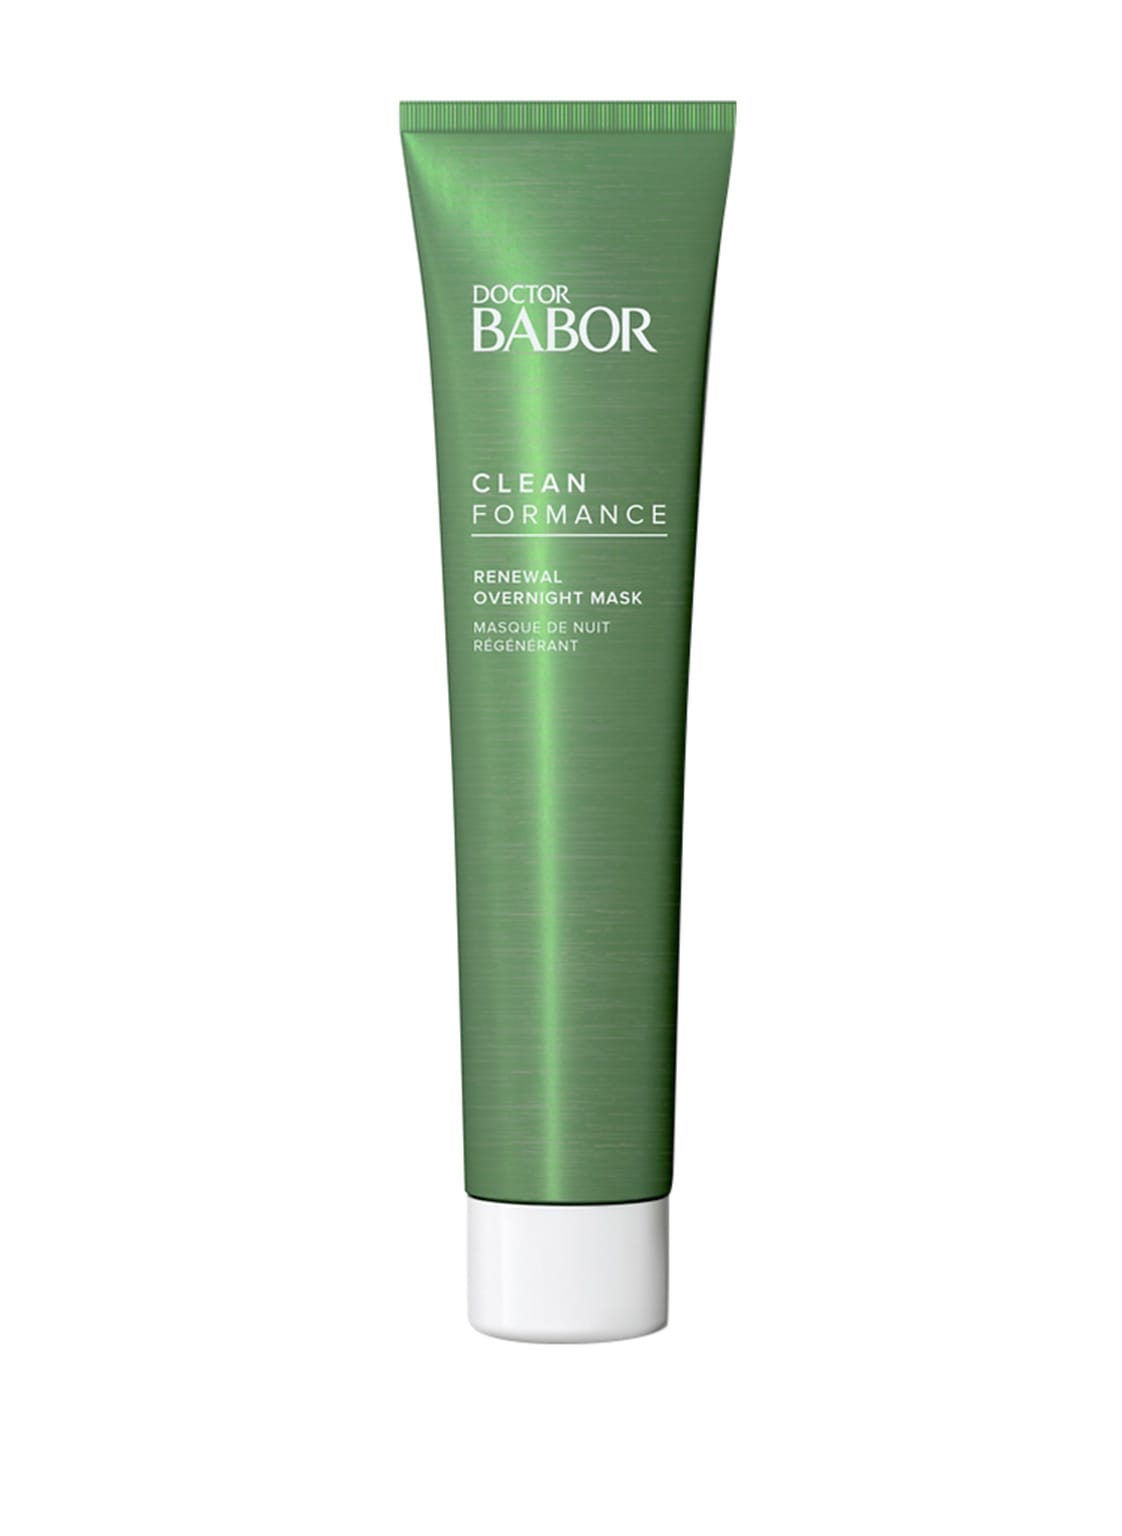 Babor Doctor Babor Clean Formance - Renewal Overnight Mask 75 ml von BABOR